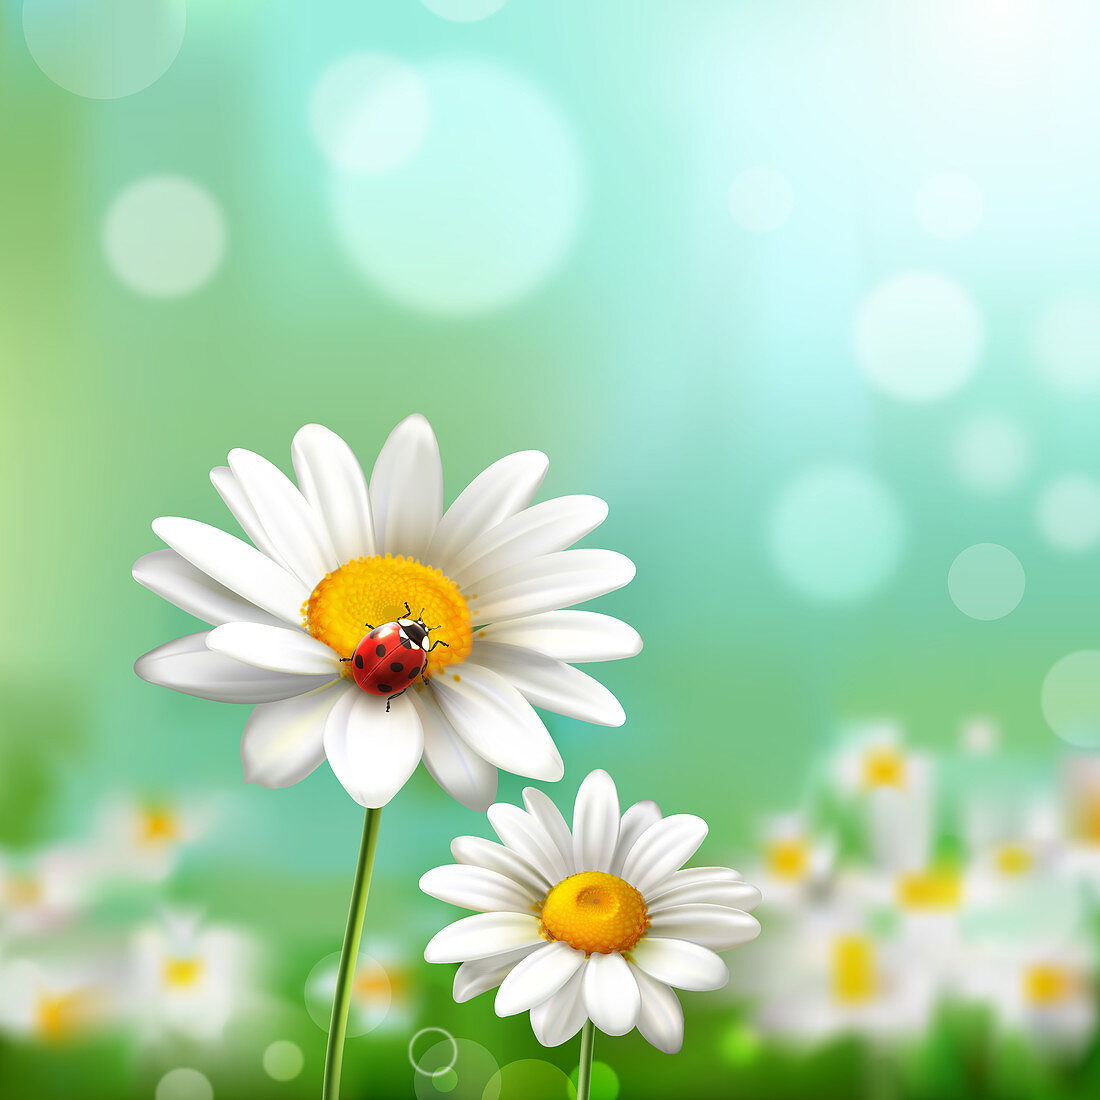 Daisy flowers, illustration